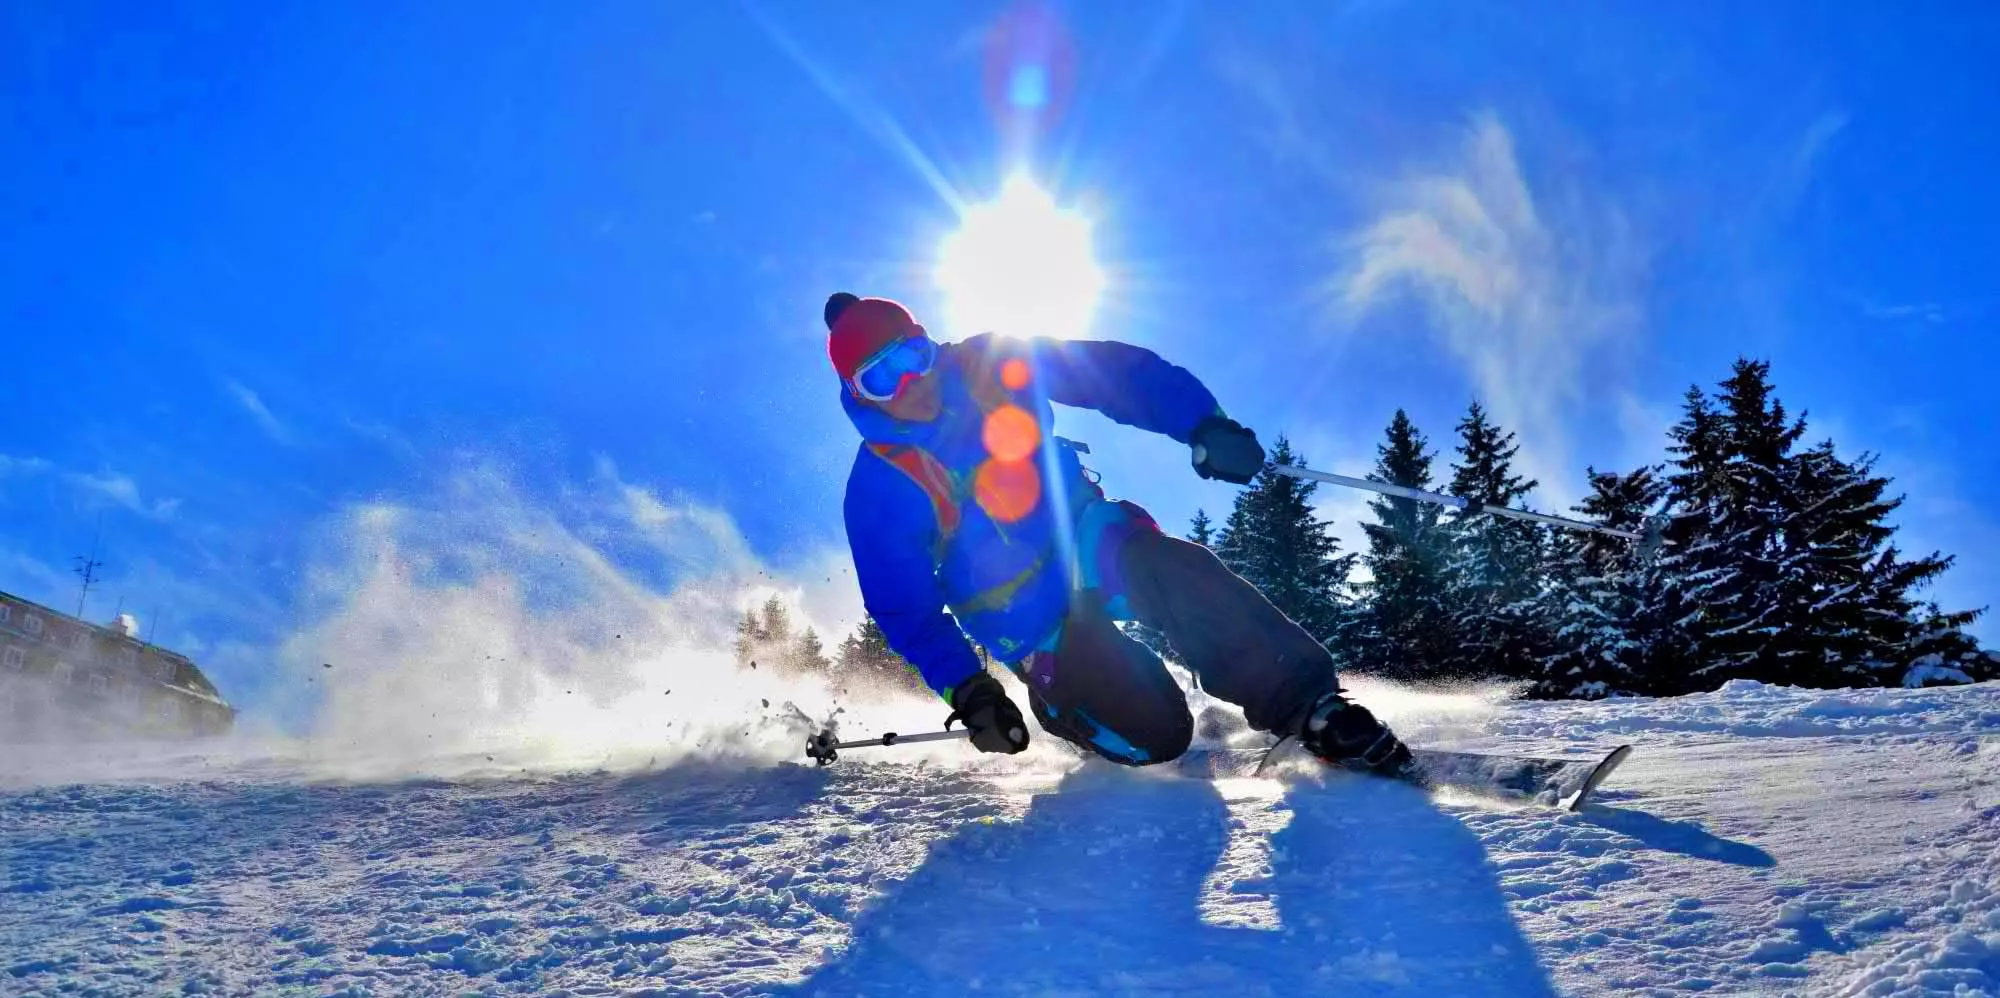 Snowsport School Pec pod Snezkou in Czech Republic, Europe | Snowboarding,Skiing - Rated 0.9